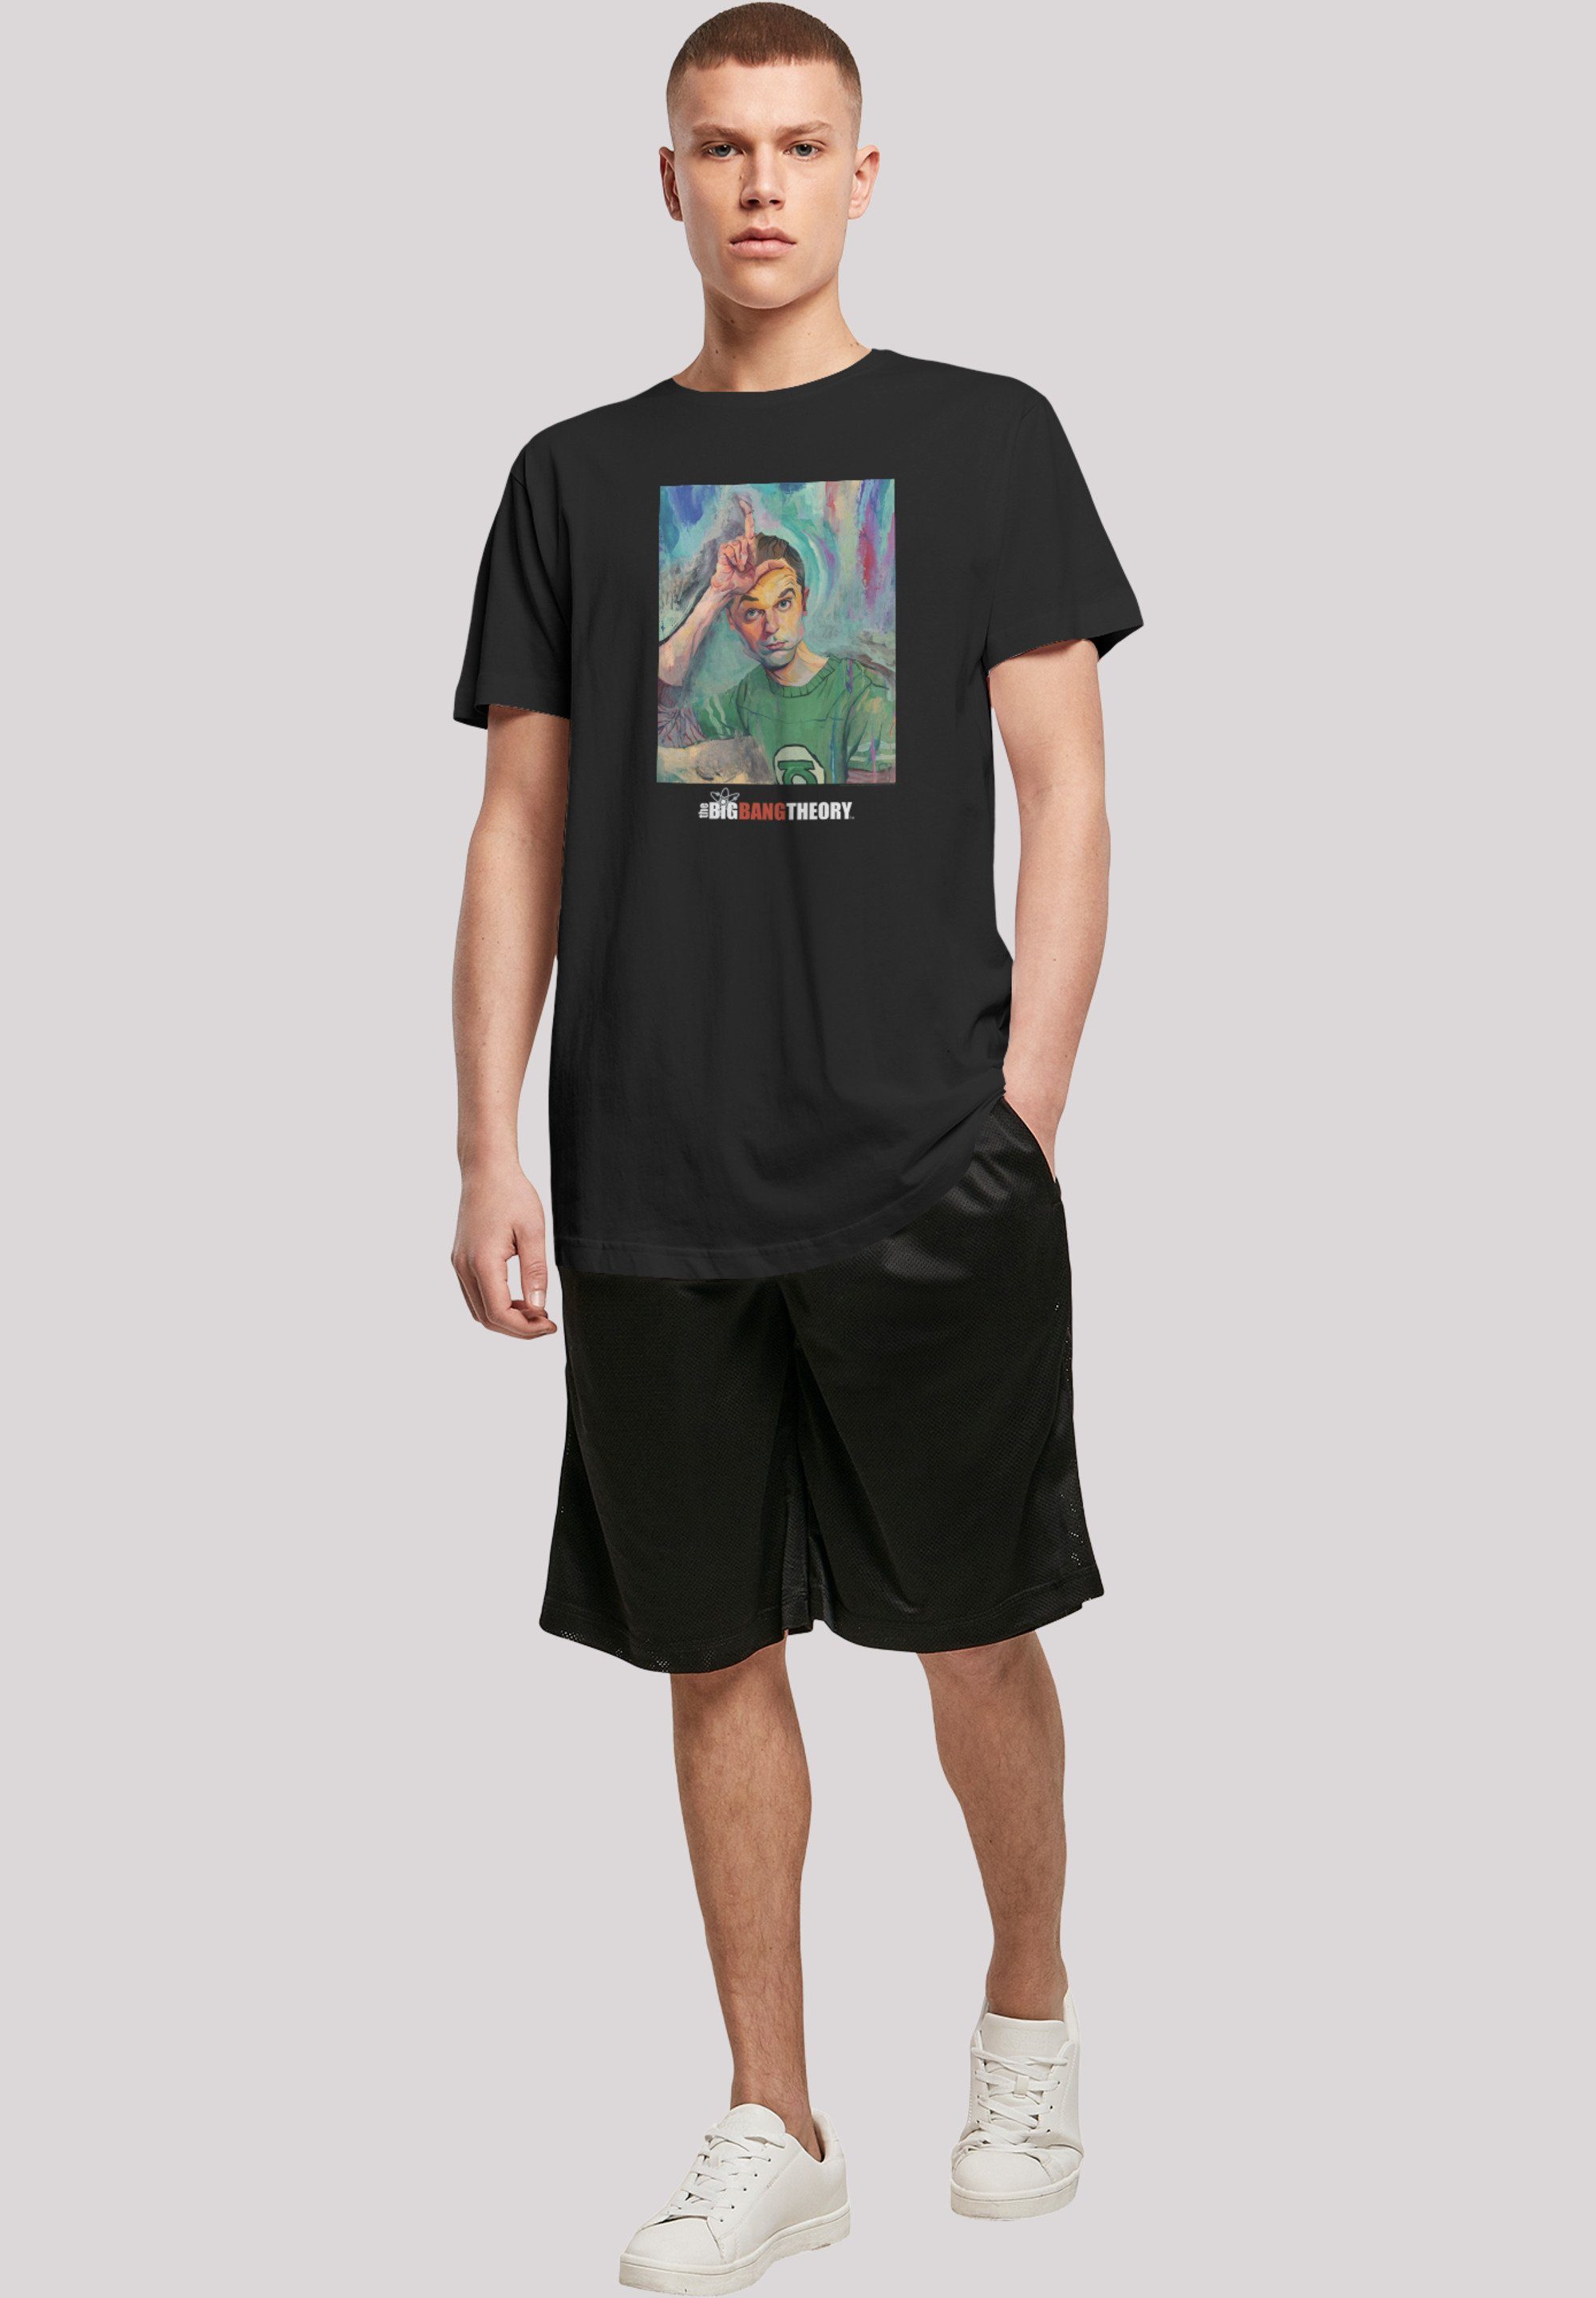 'Big Painting' Bang Theory F4NT4STIC Sheldon Long Cut T-Shirt Loser Print Shirt